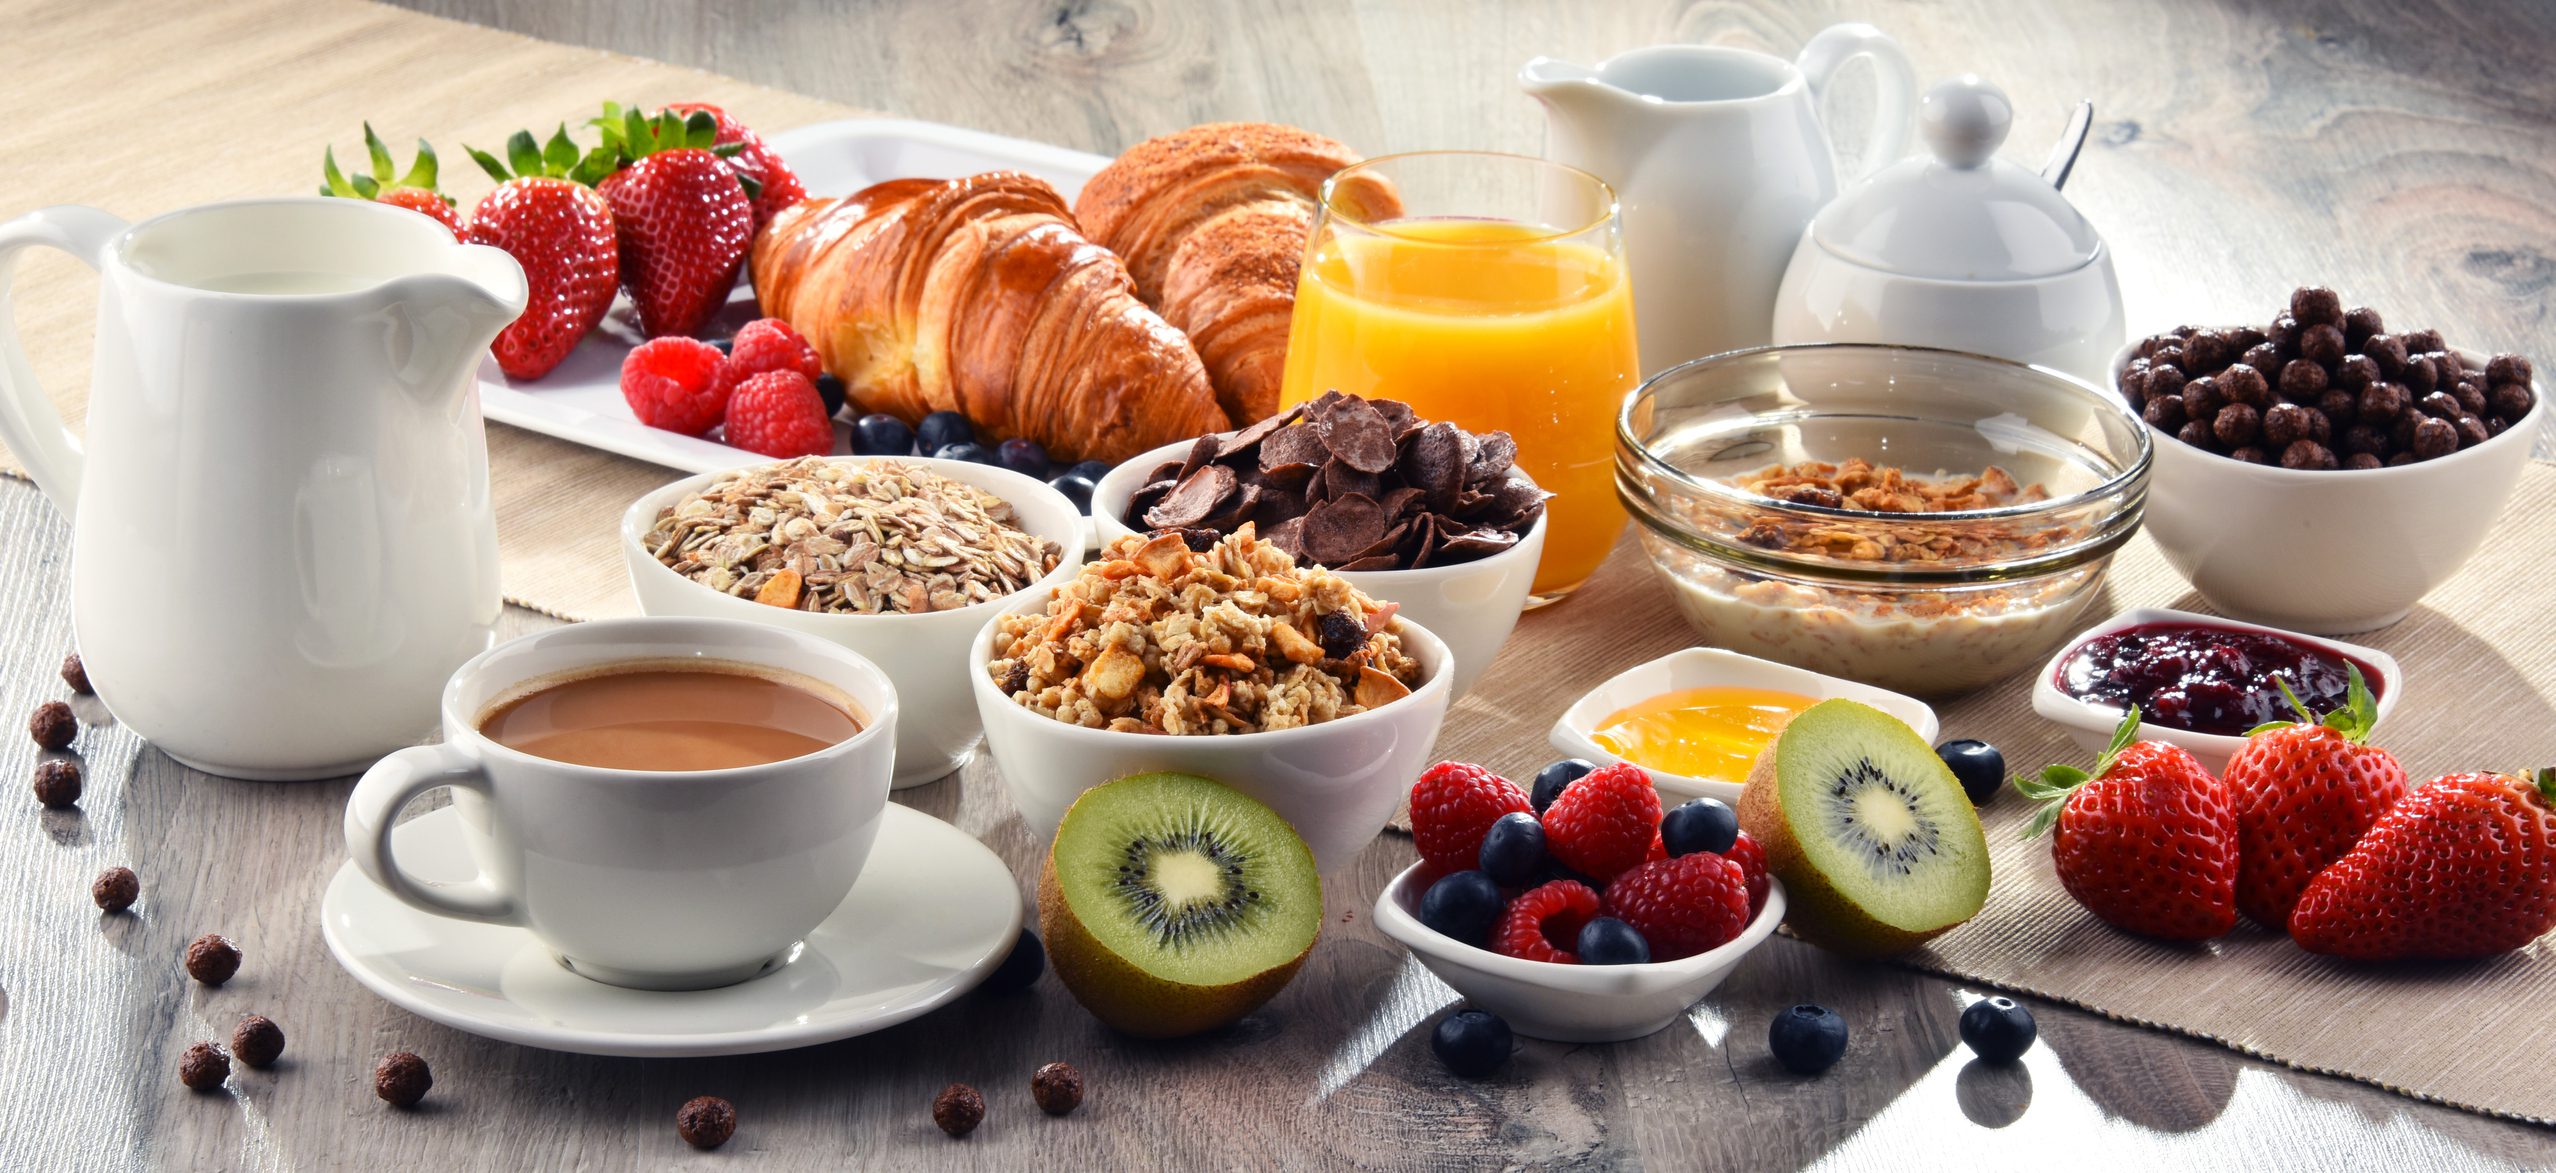 Enjoy a healthy breakfast